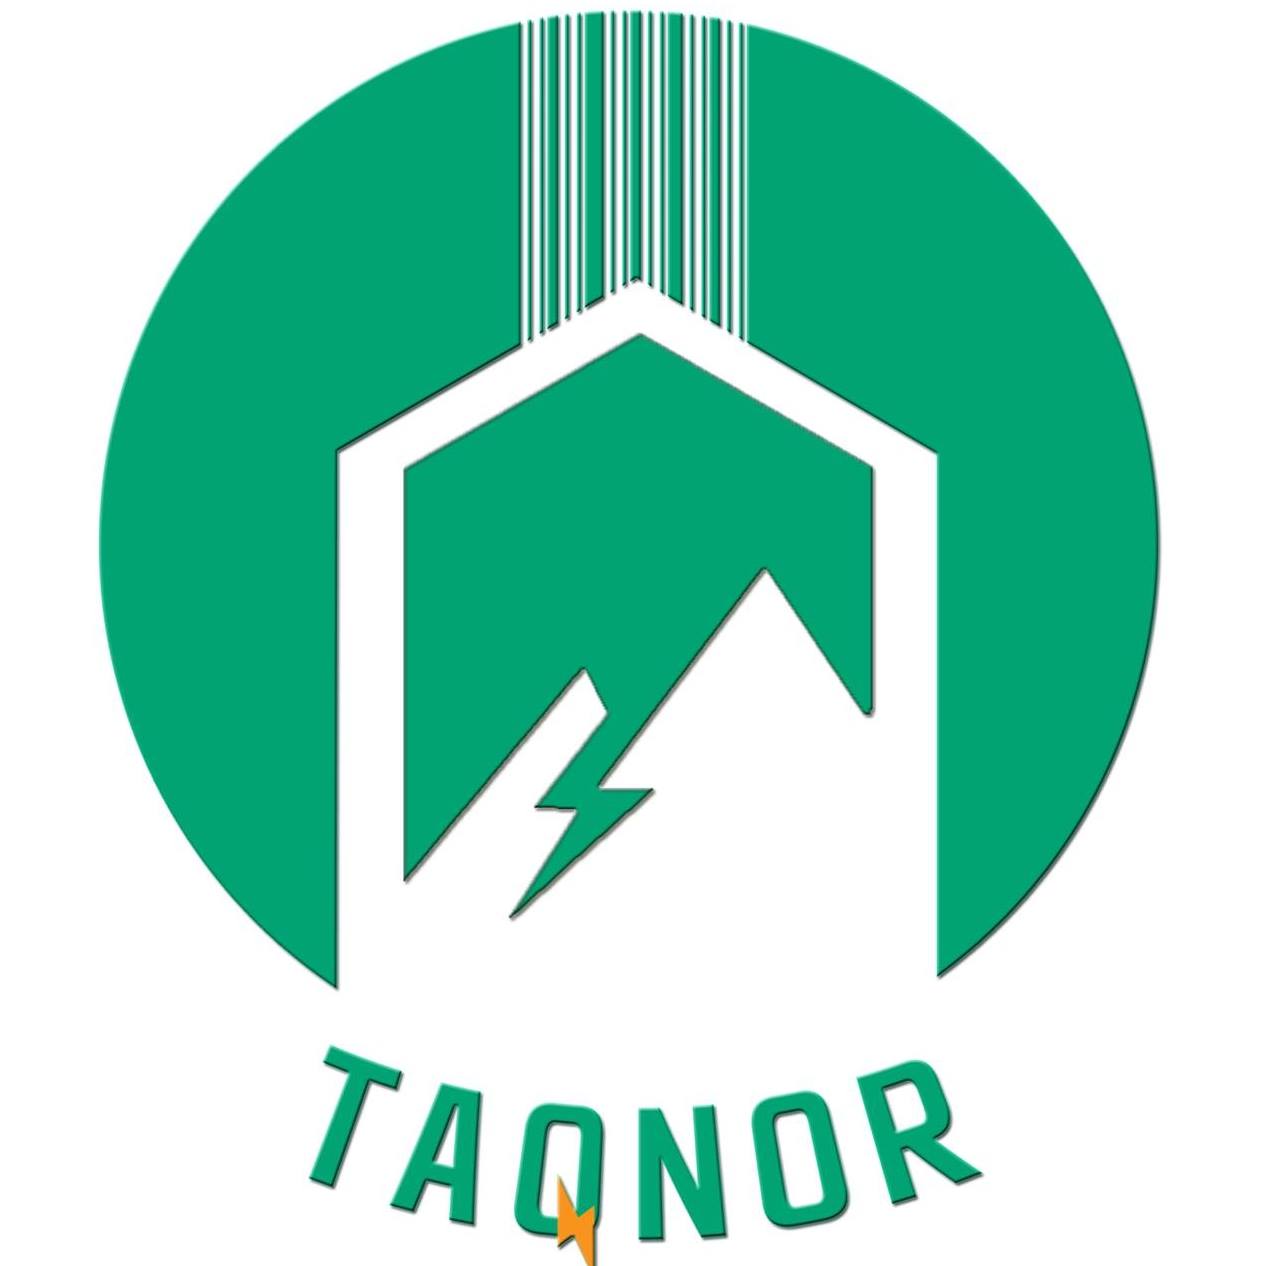 TAQNOR company